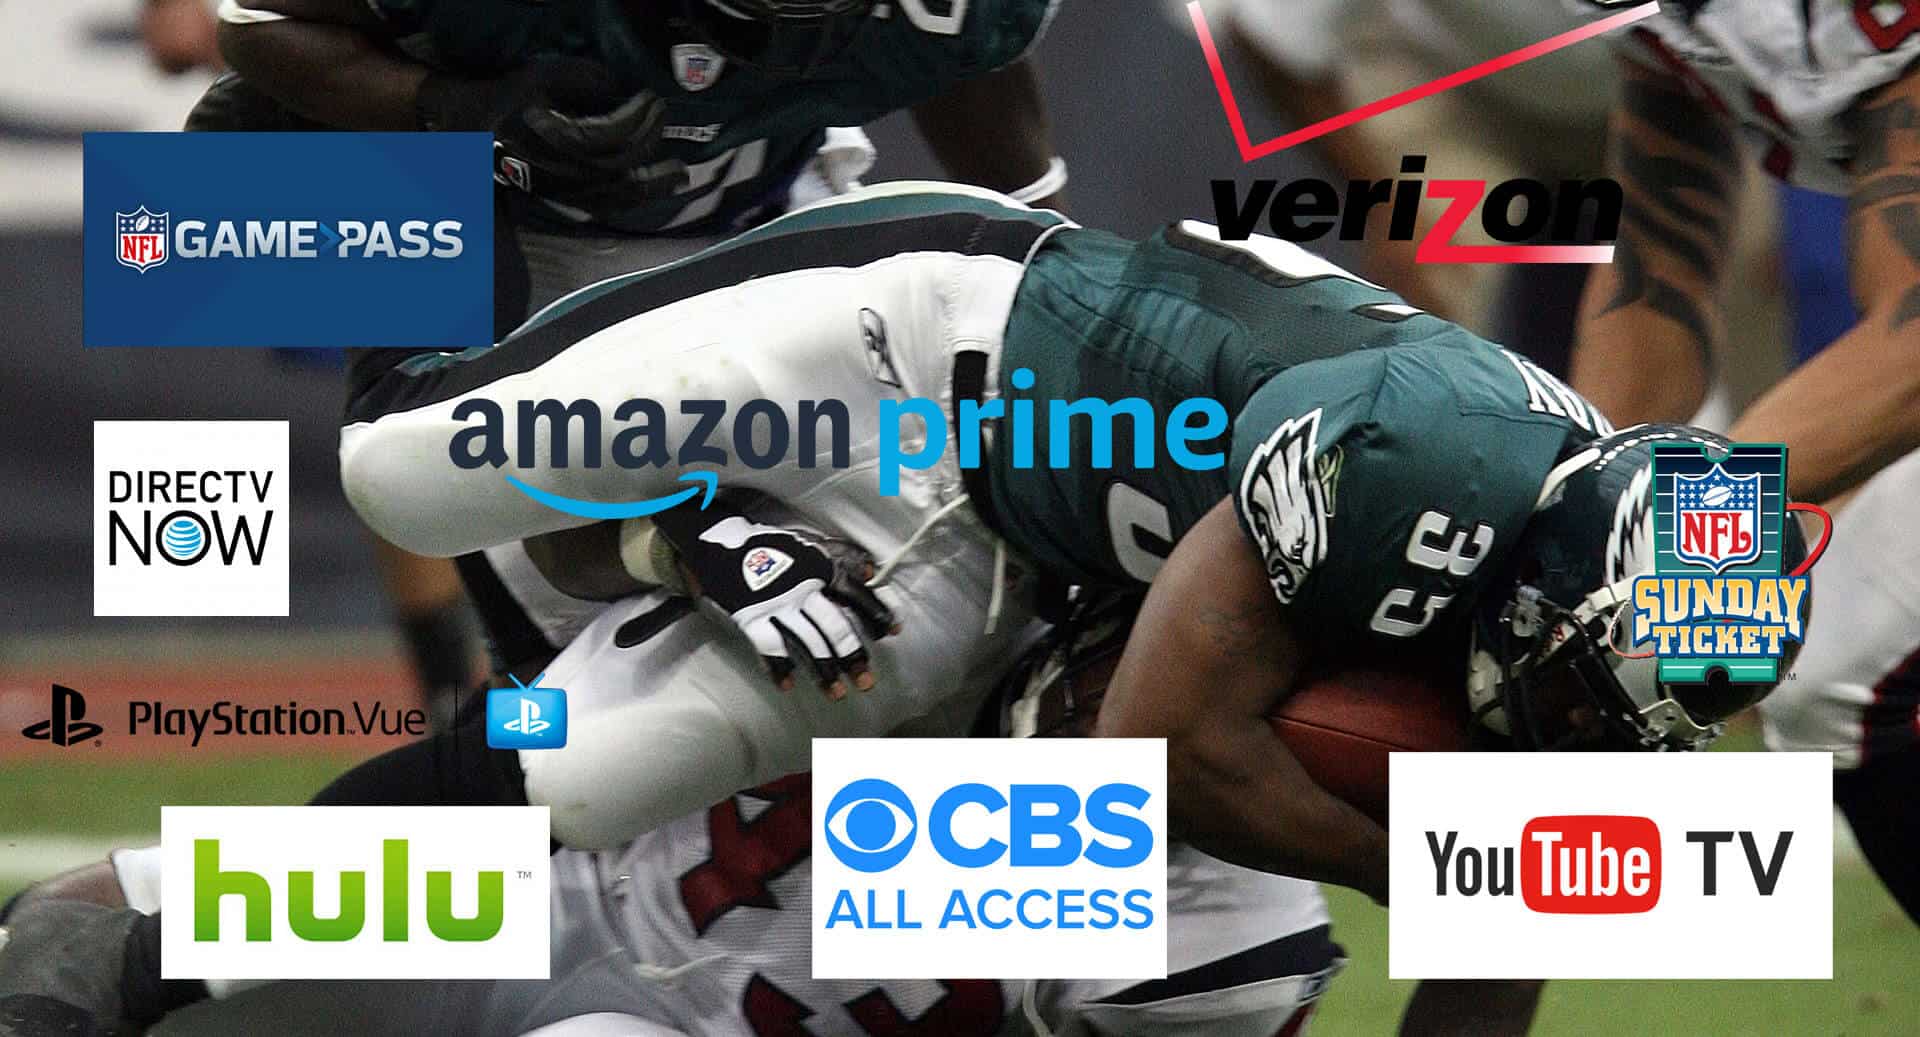 Complete guide to stream NFL games live in 2018 - TV, OTT, Kodi, & more